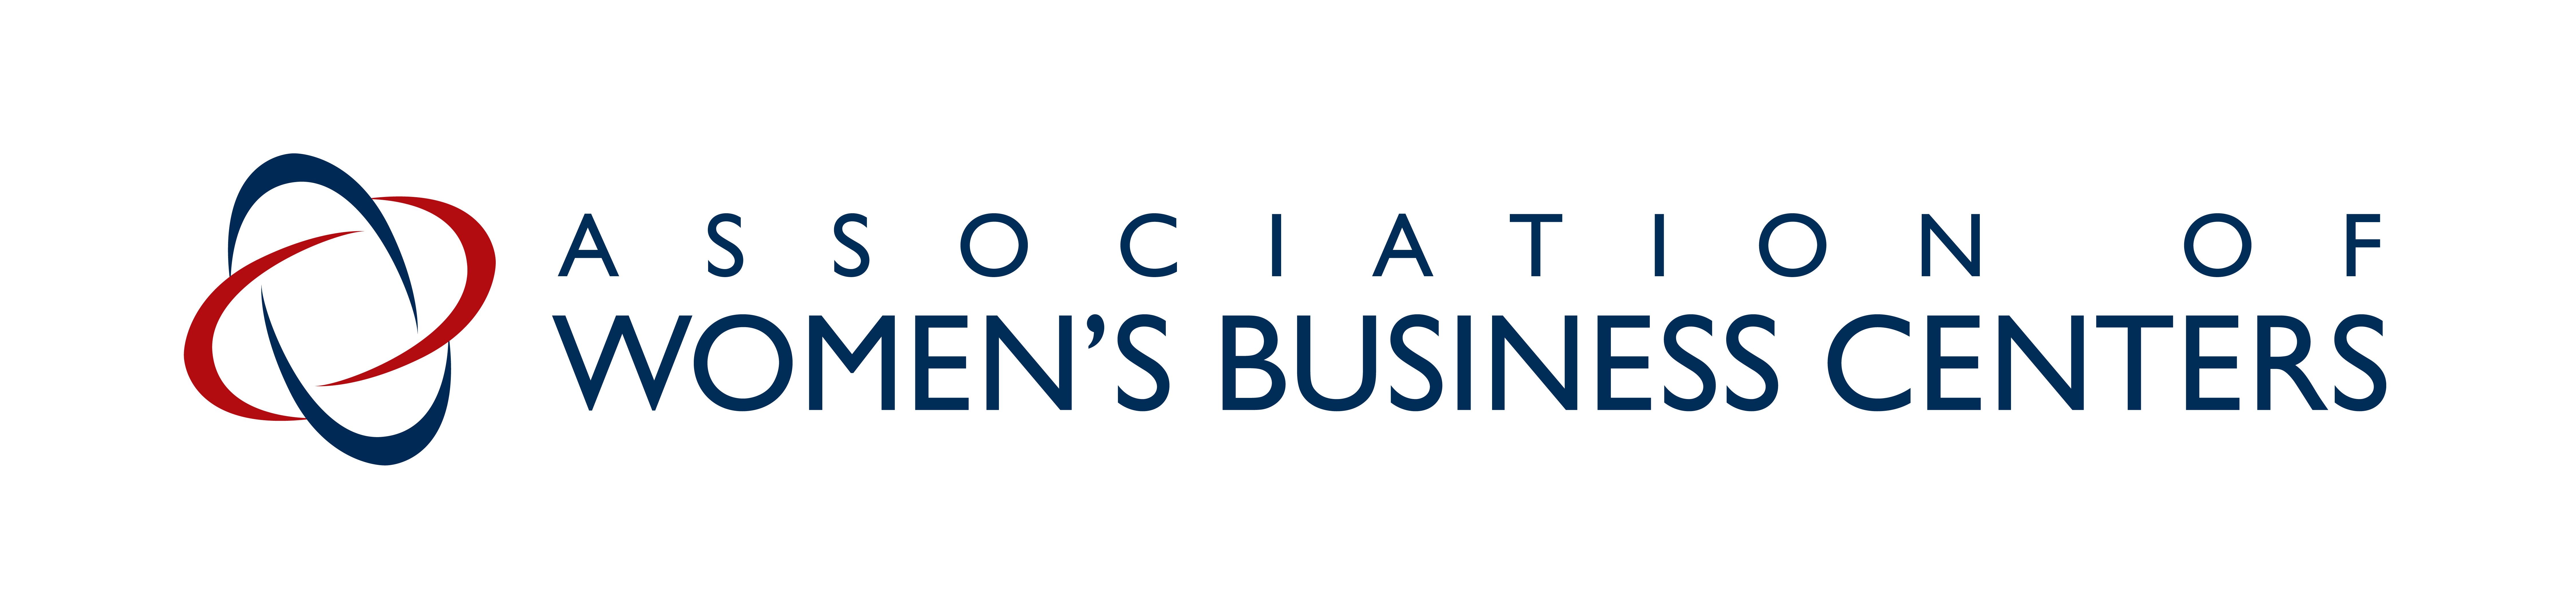 Association of Womens Business Centers logo